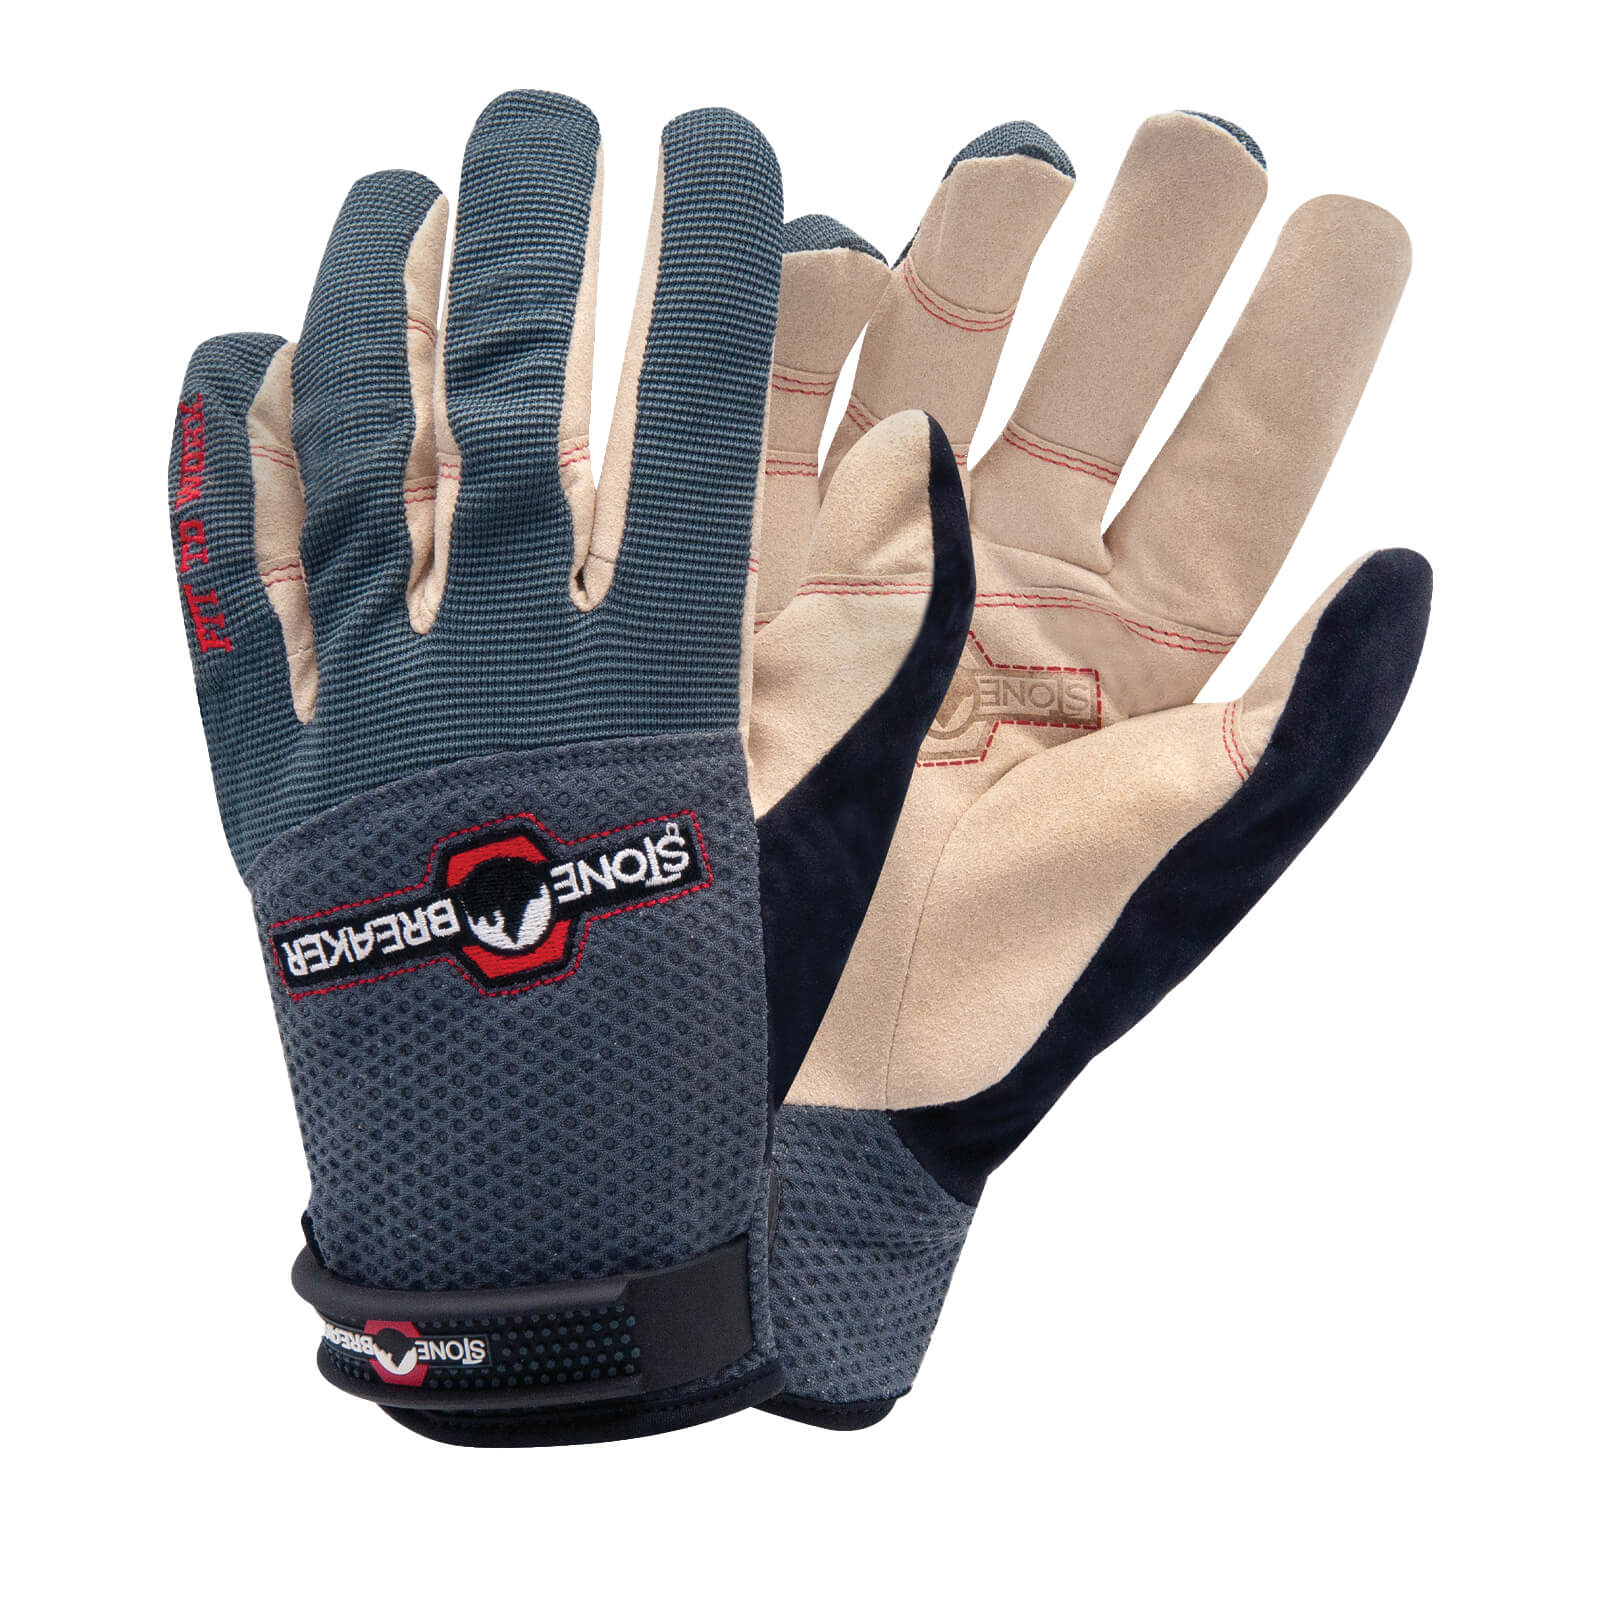 StoneBreaker Nailbender Trades Work Gloves - Large - Charcoal